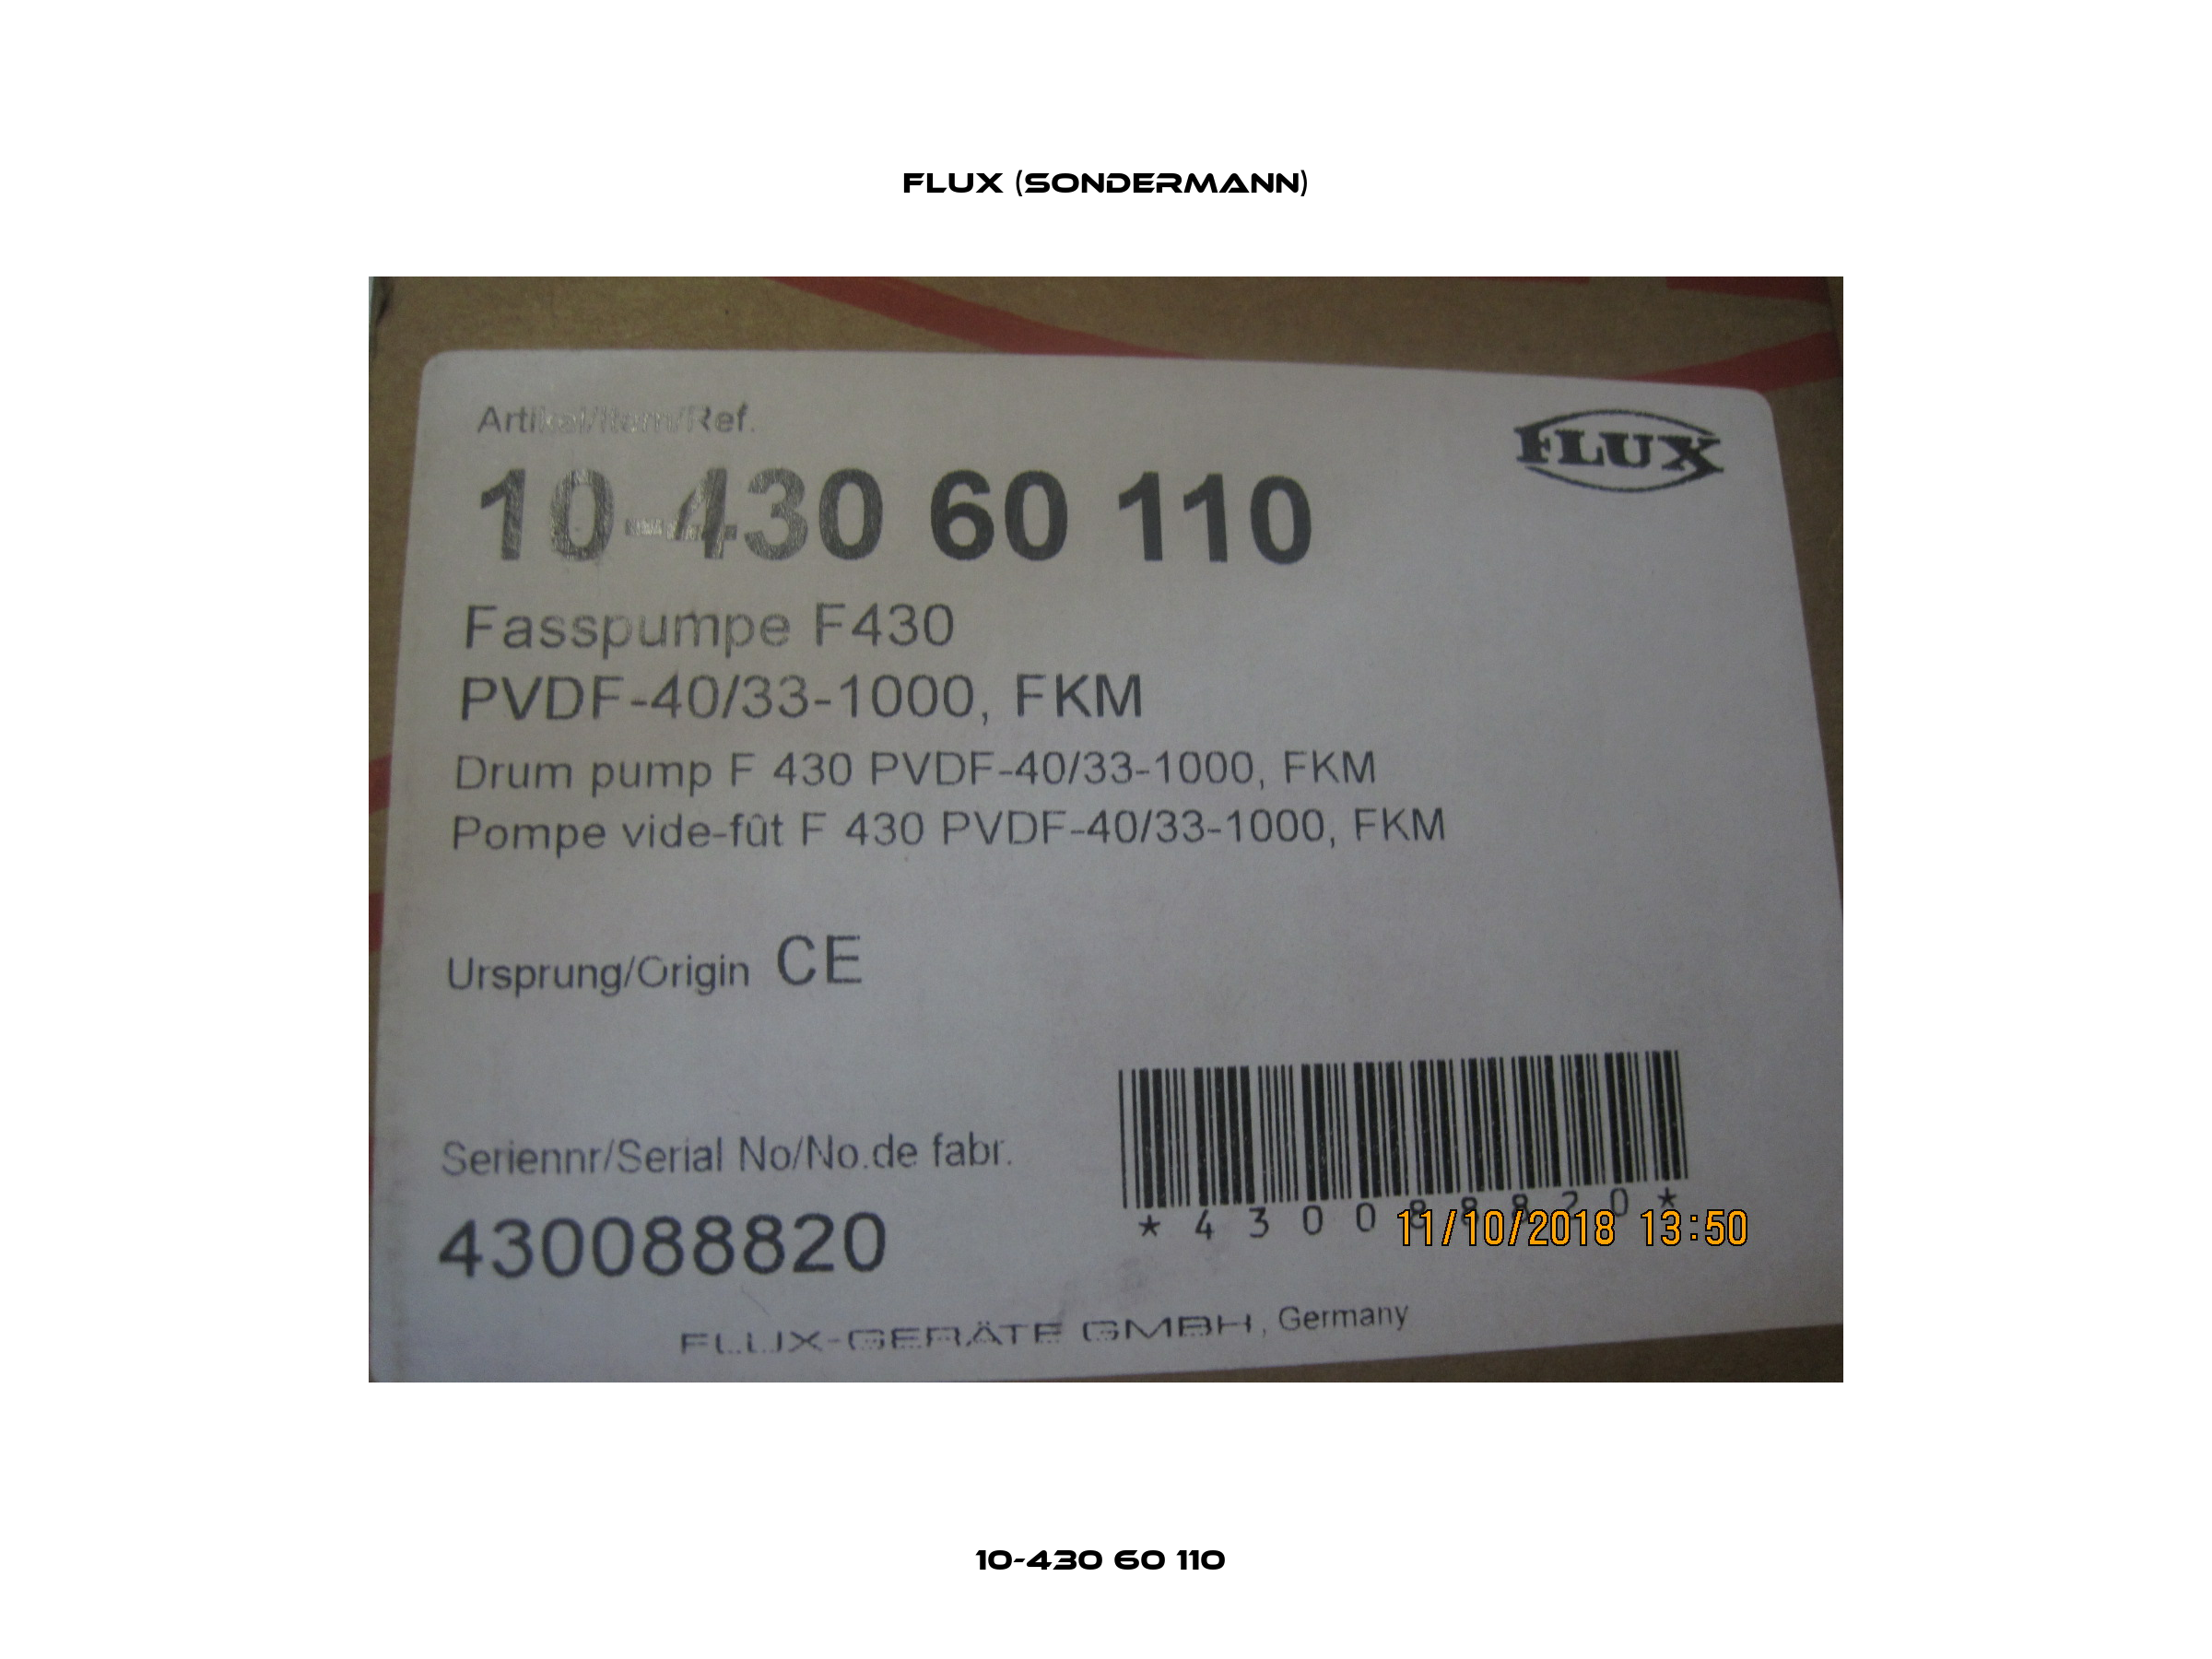 10-430 60 110  Flux (Sondermann)